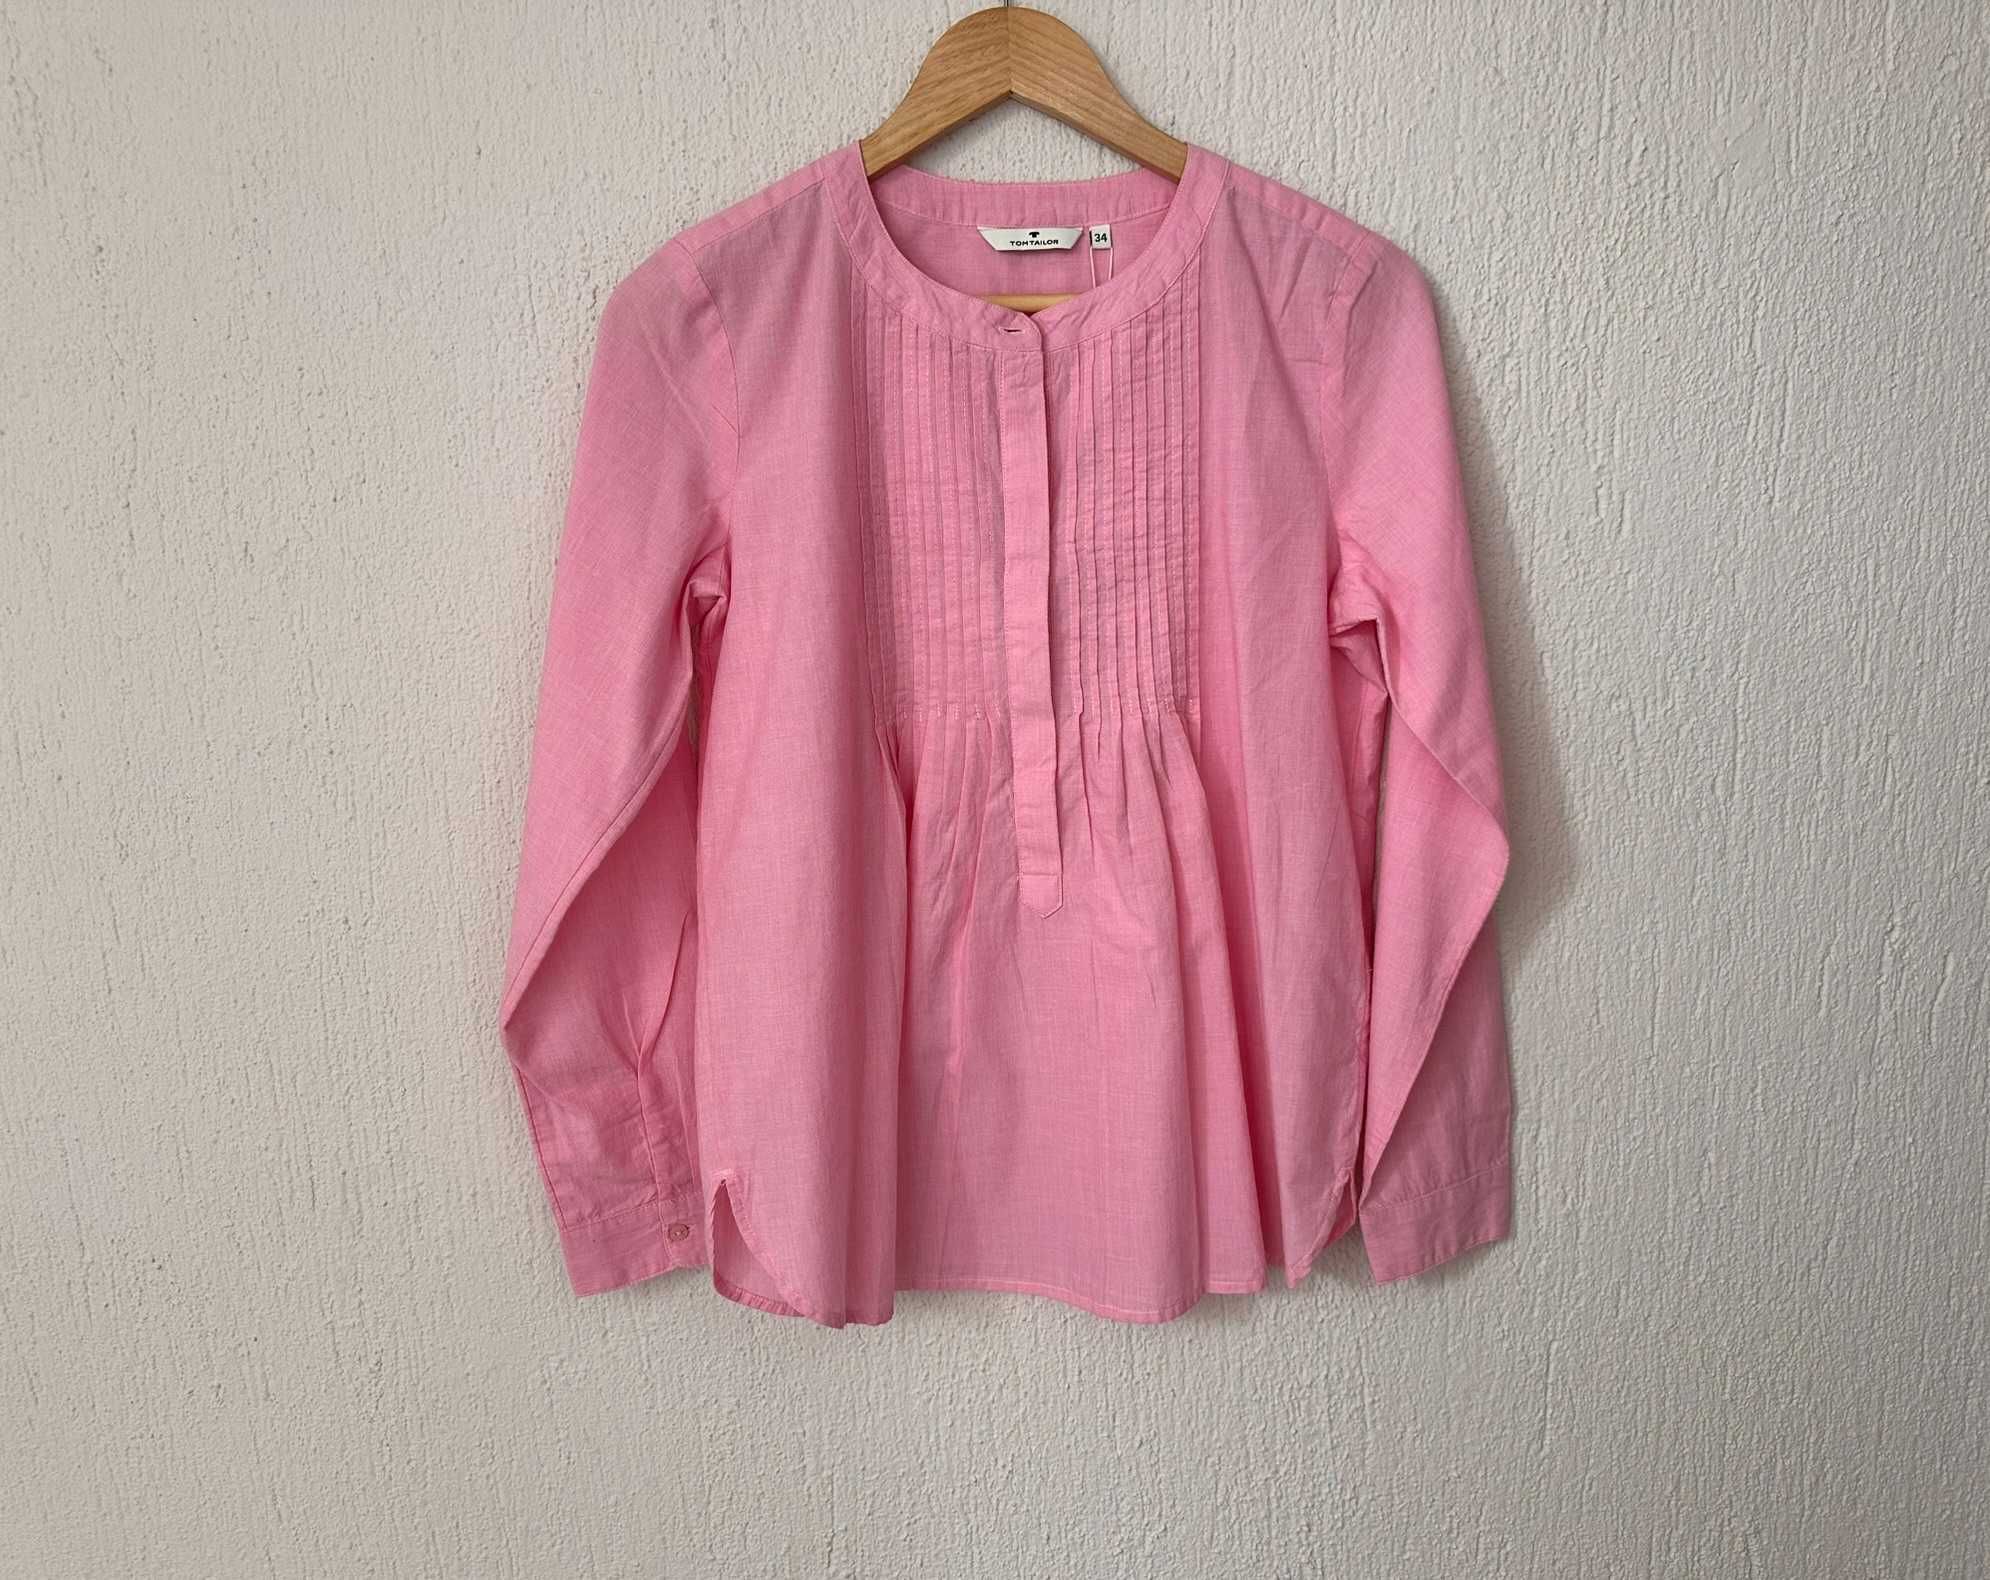 Блузa Tom Tailor - налична в розово и синьо - 34, 38, 44 размер